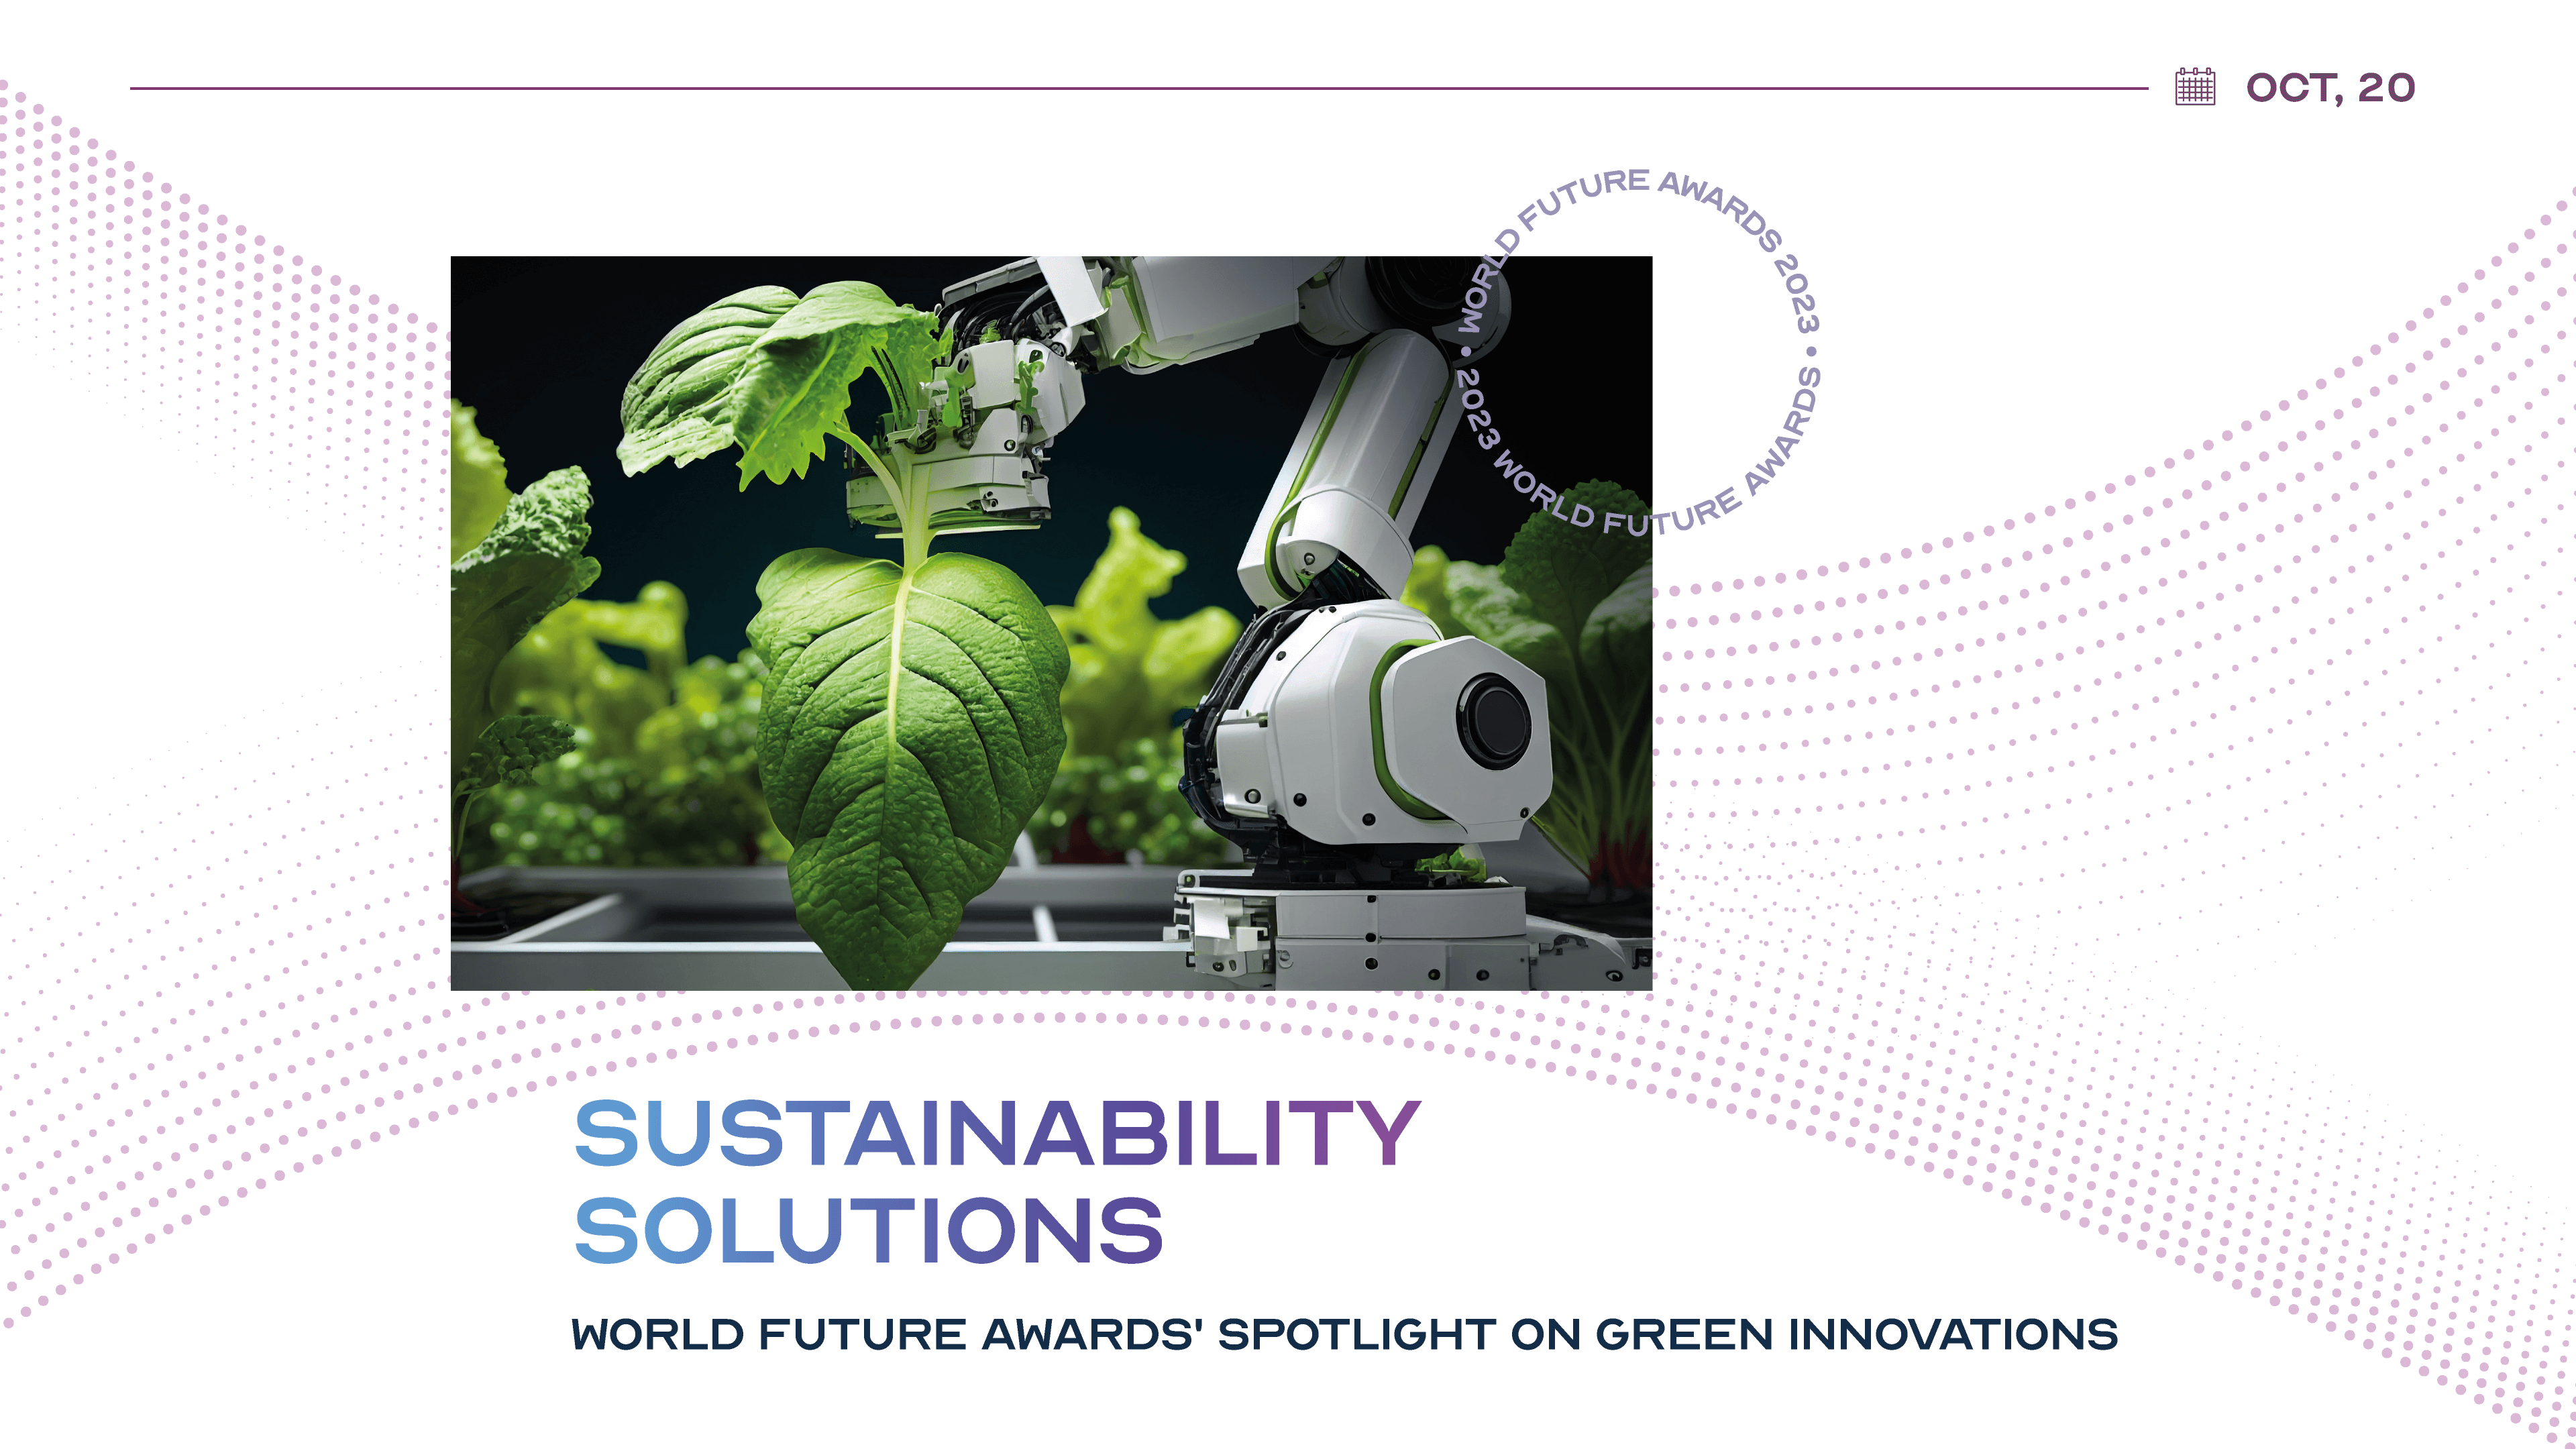 Sustainability Solutions: World Future Awards’ Spotlight on Green Innovations